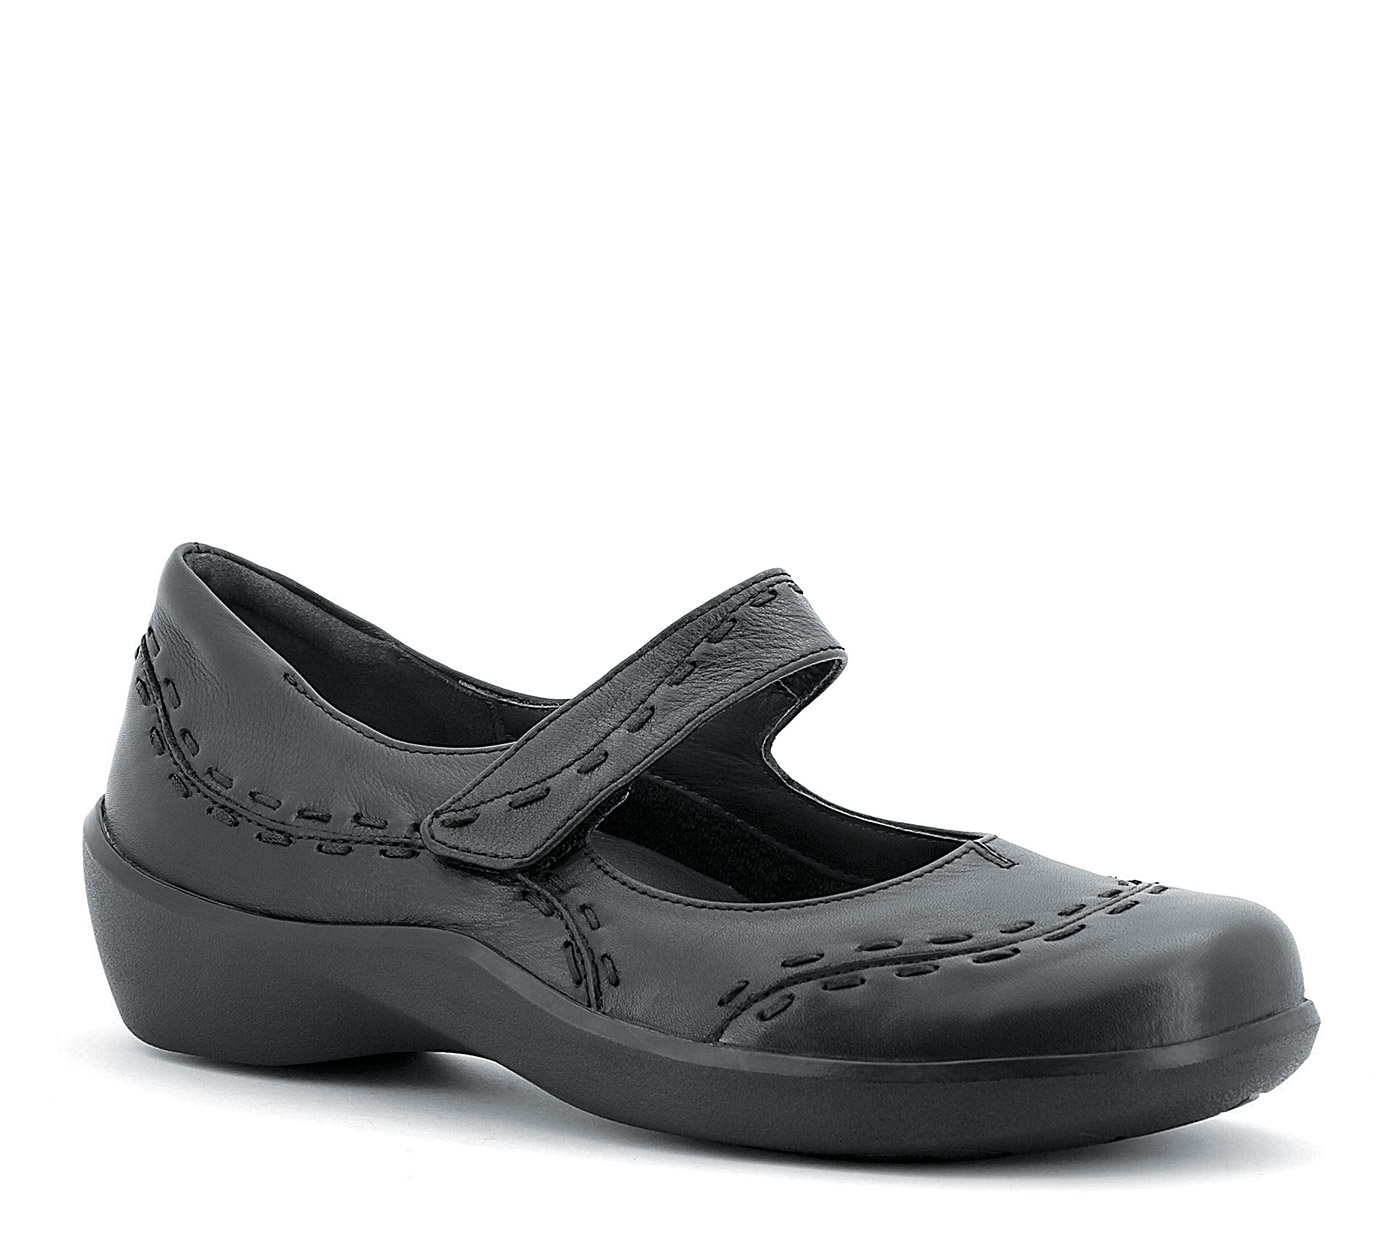 Ziera Gummibear Black Leather MaryJane Comfort Walking Casual Dress Shoes Womens 